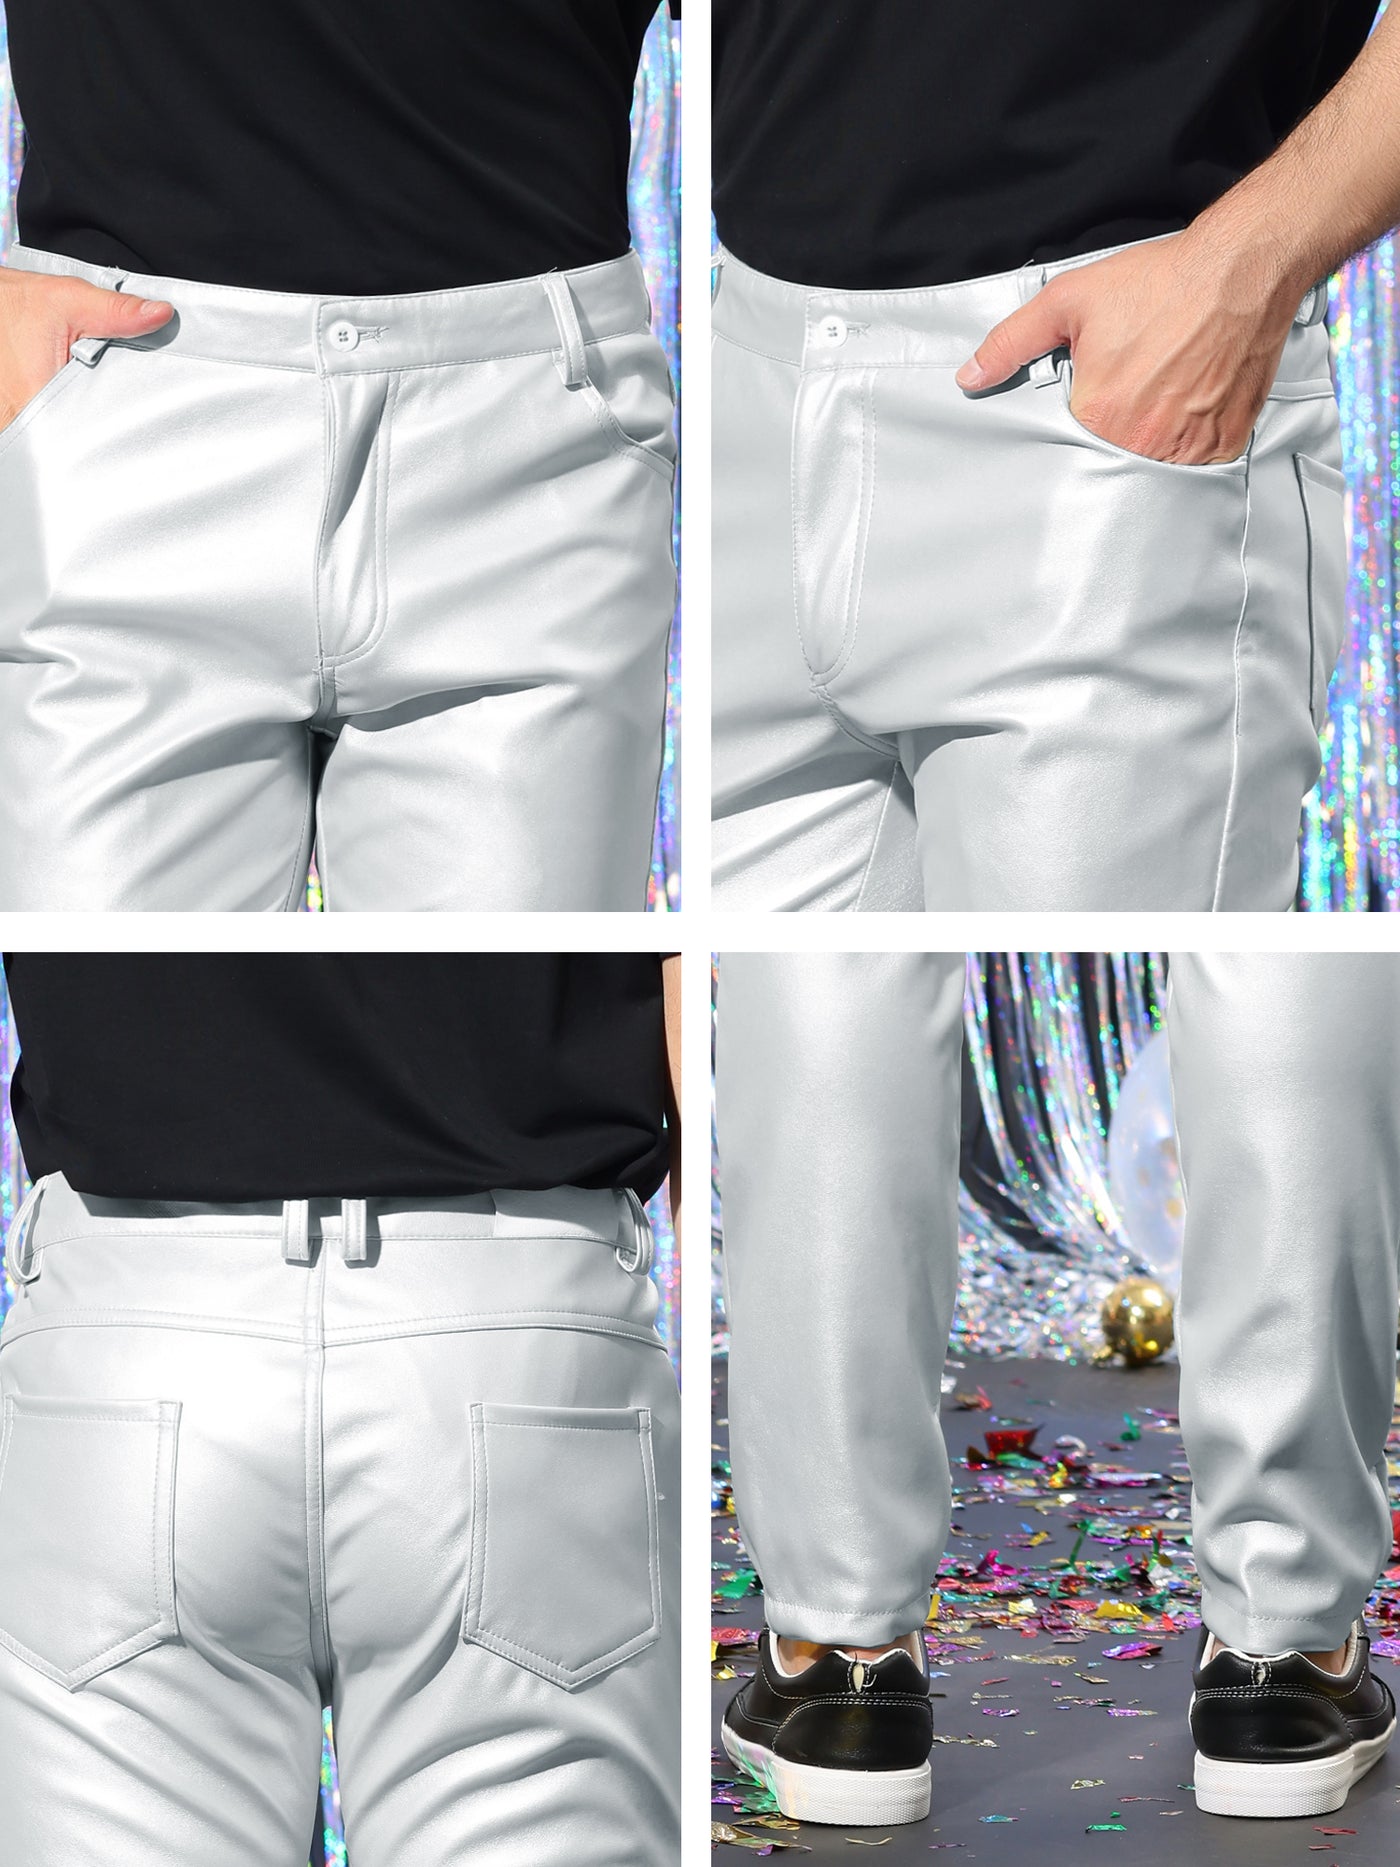 Bublédon Men's Metallic Pants Slim Fit Night Club Disco Shiny Faux Leather Pant